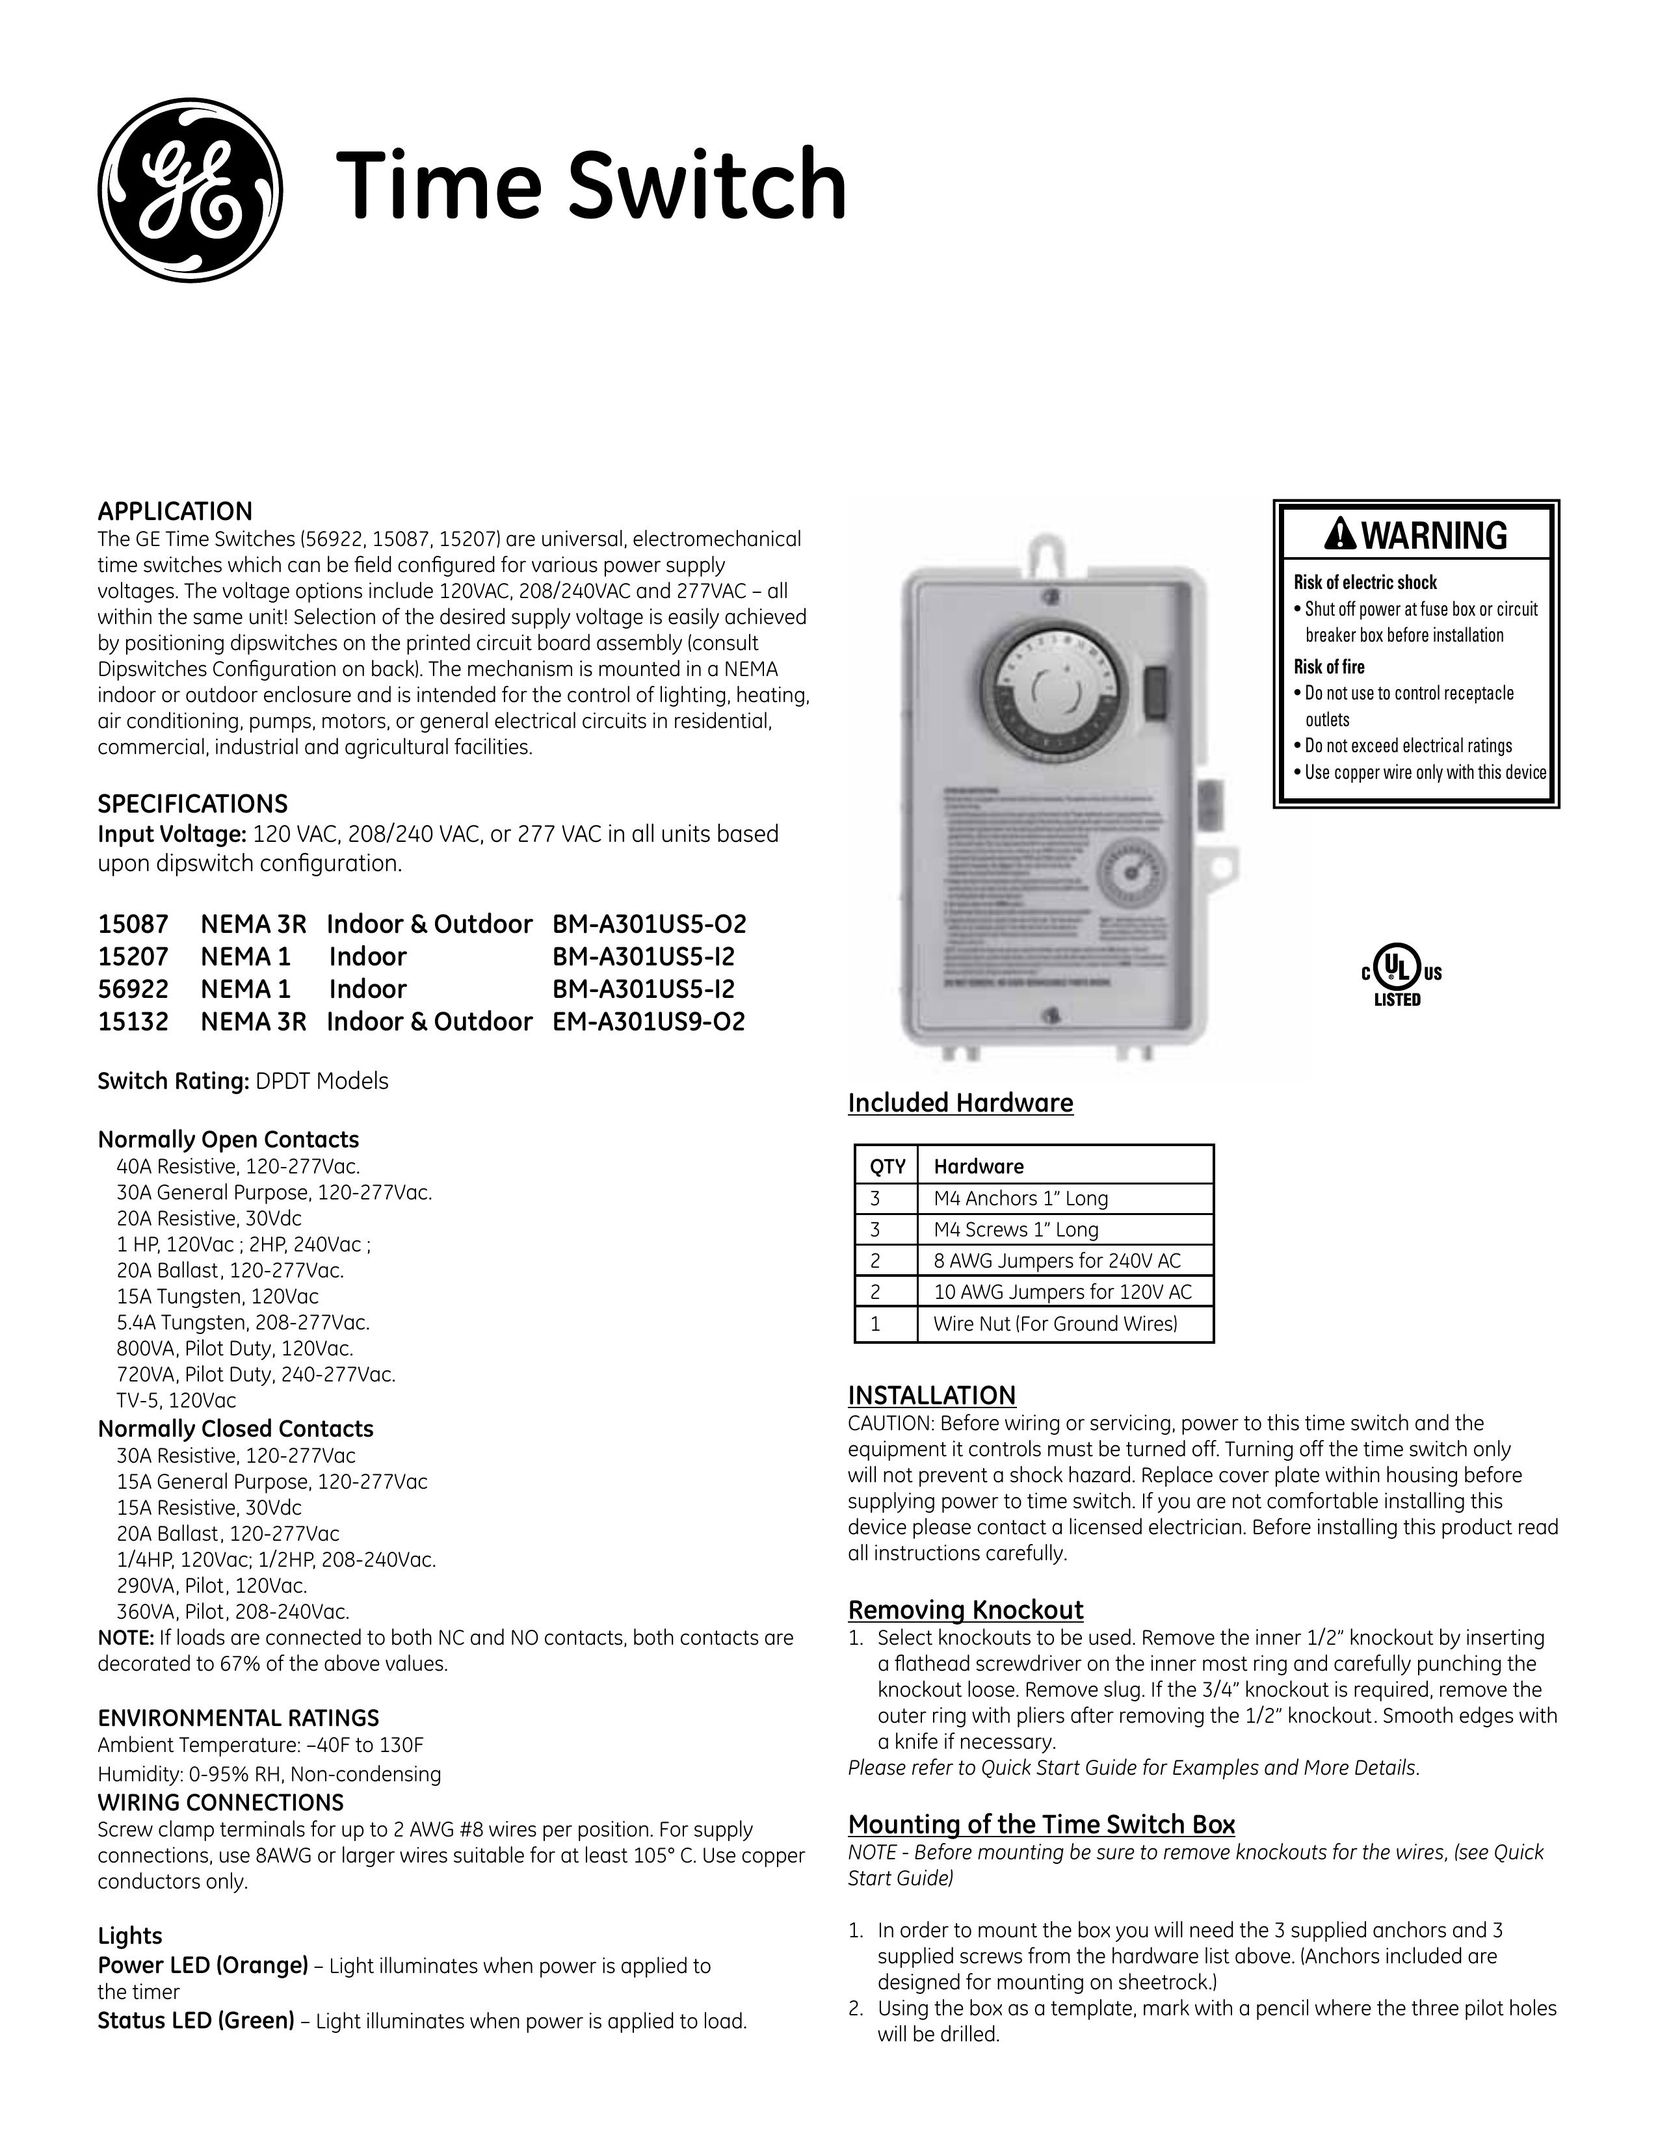 GE BM-A301US5-O2 Switch User Manual